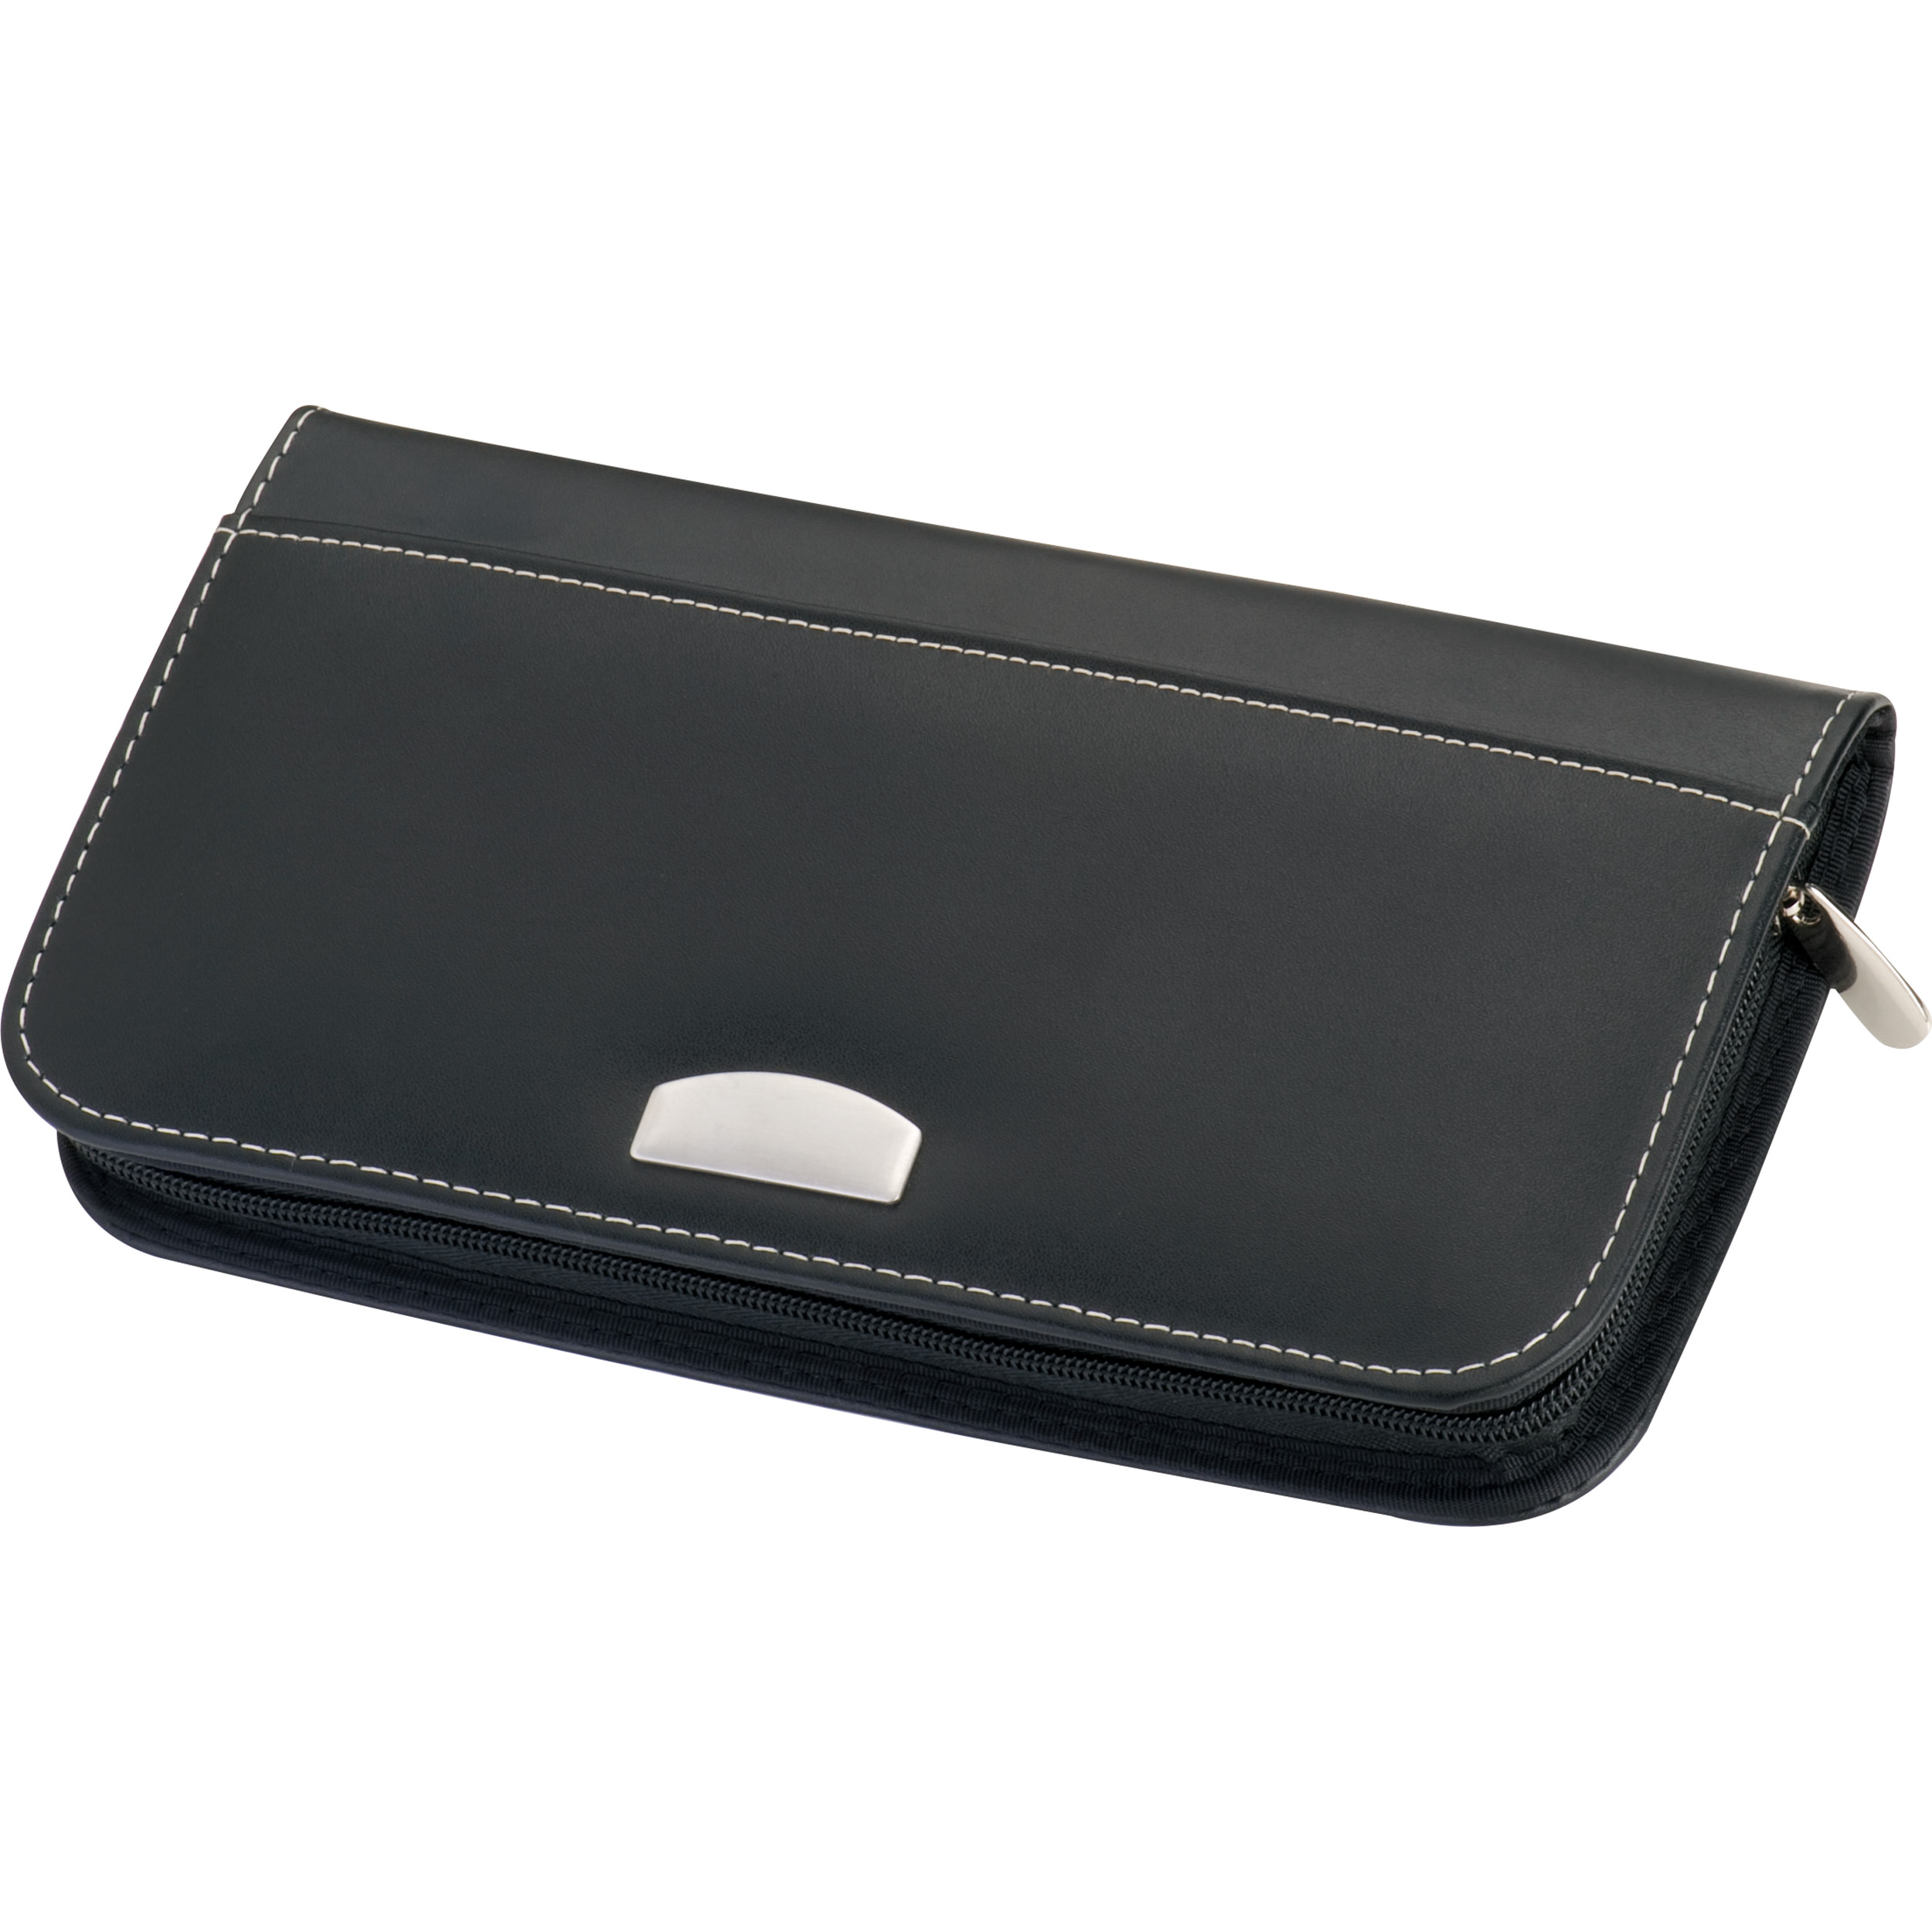 CrisMa leather travel wallet